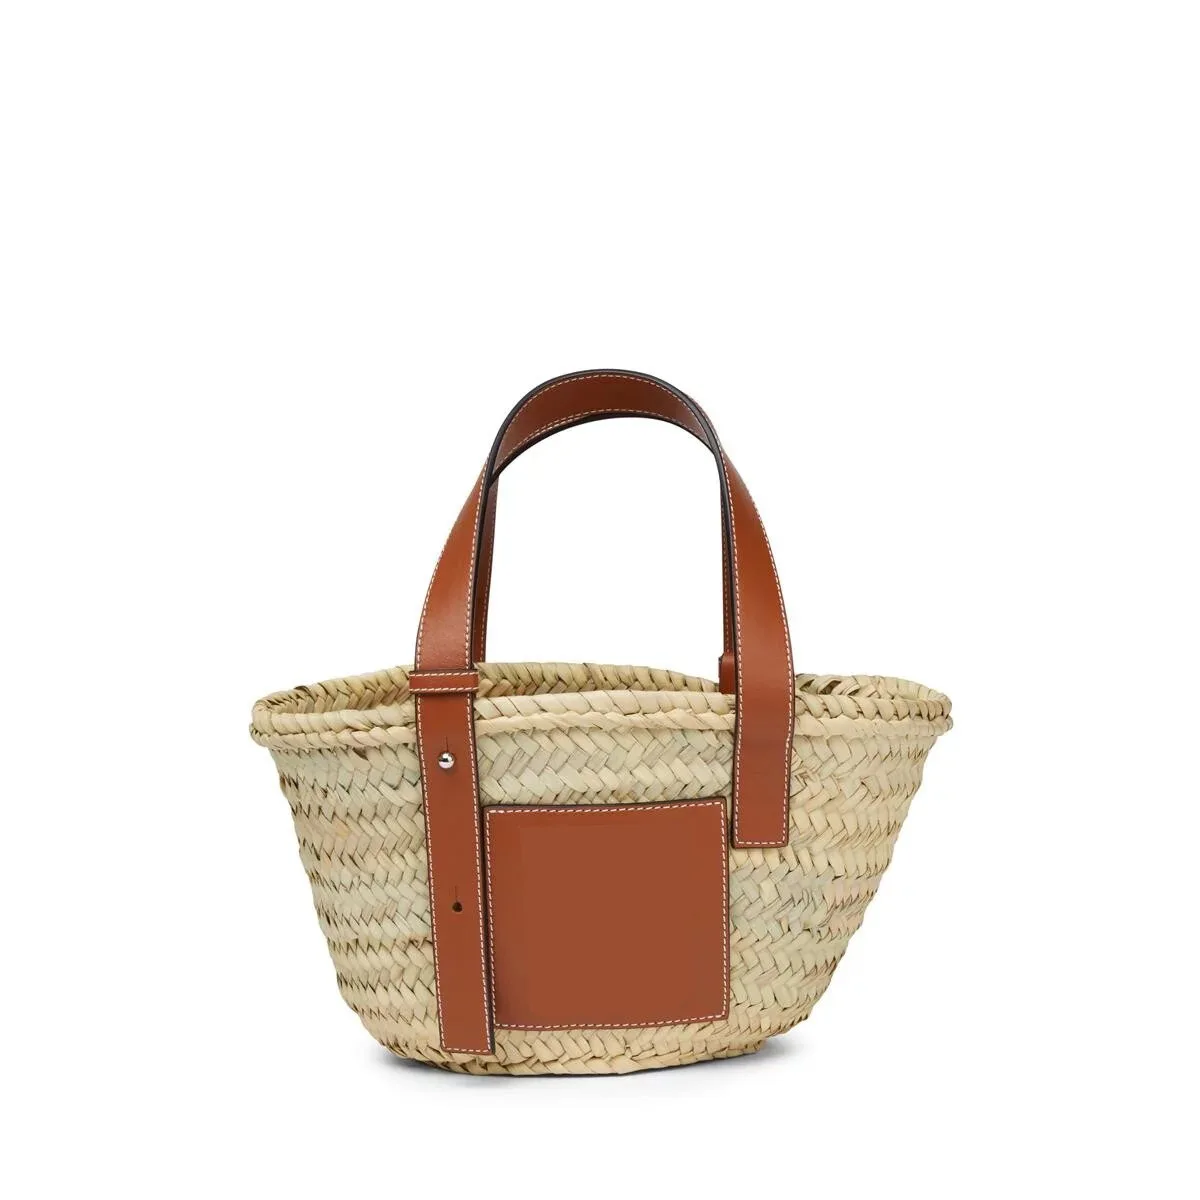 

Grass woven cabbage basket Women's bag trend 2021 Shoulder bag Women's genuine leather handbag straw bag woven bag beach bag